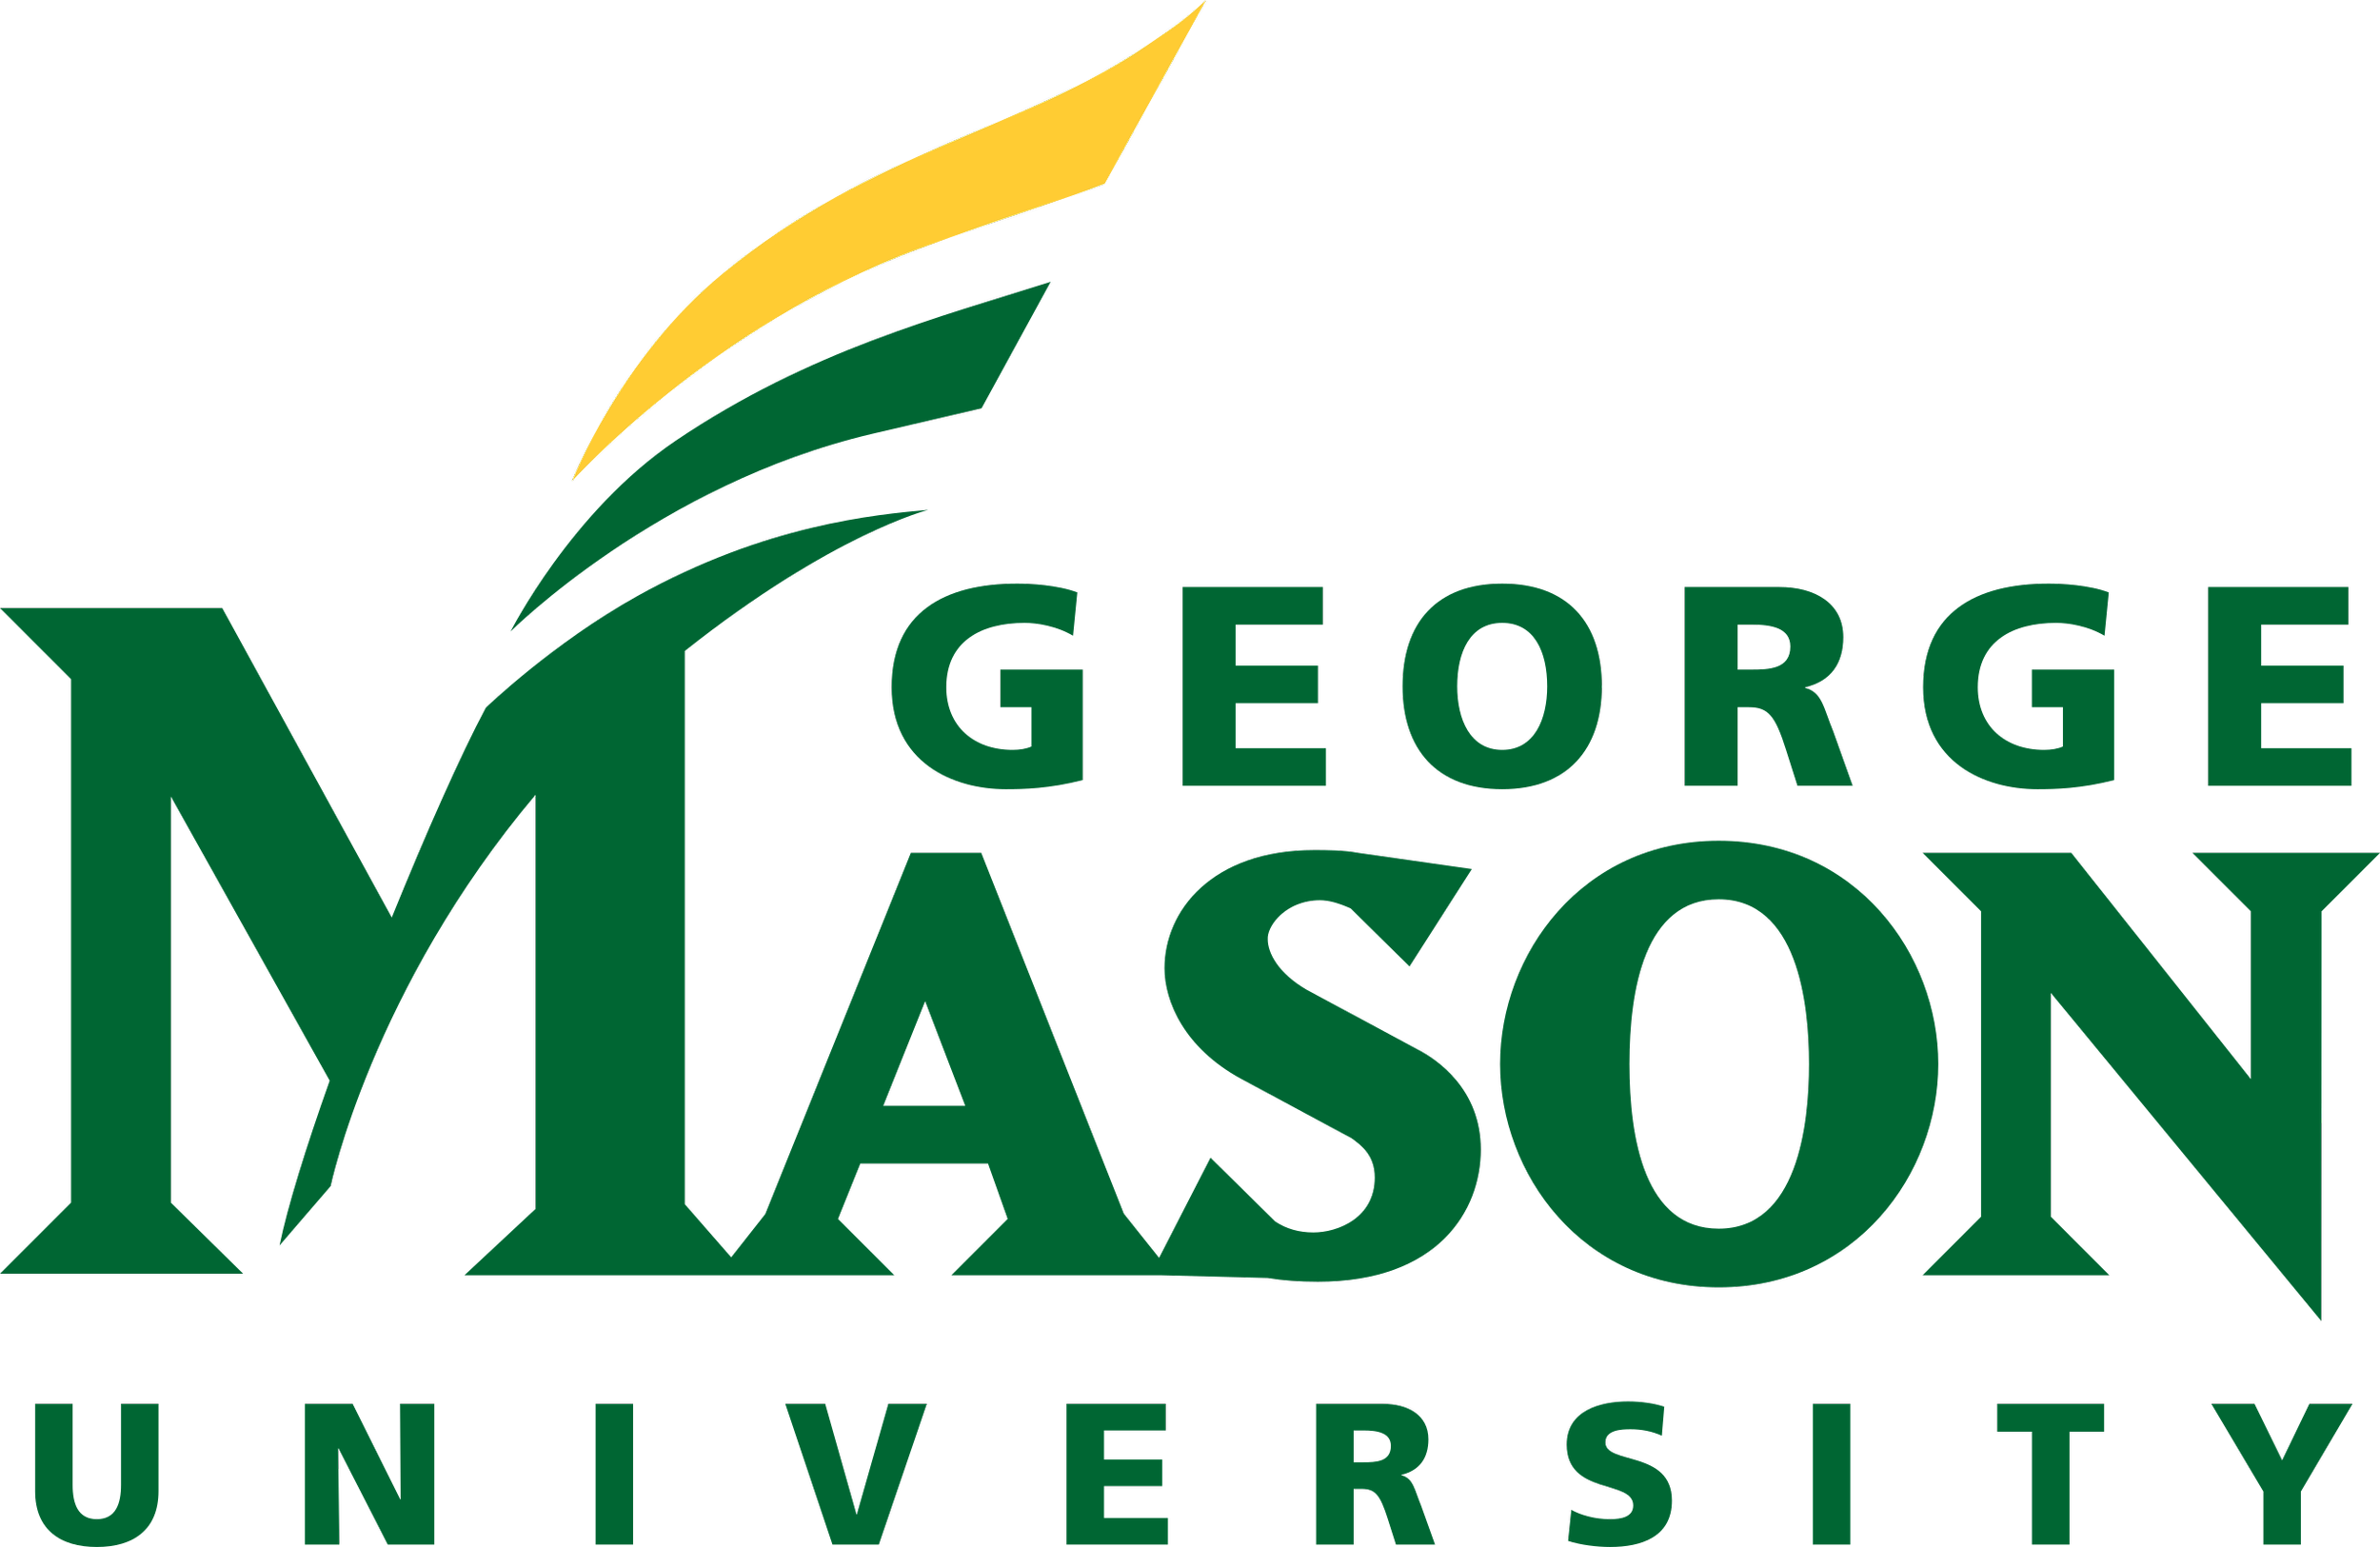 George-Mason-University.png